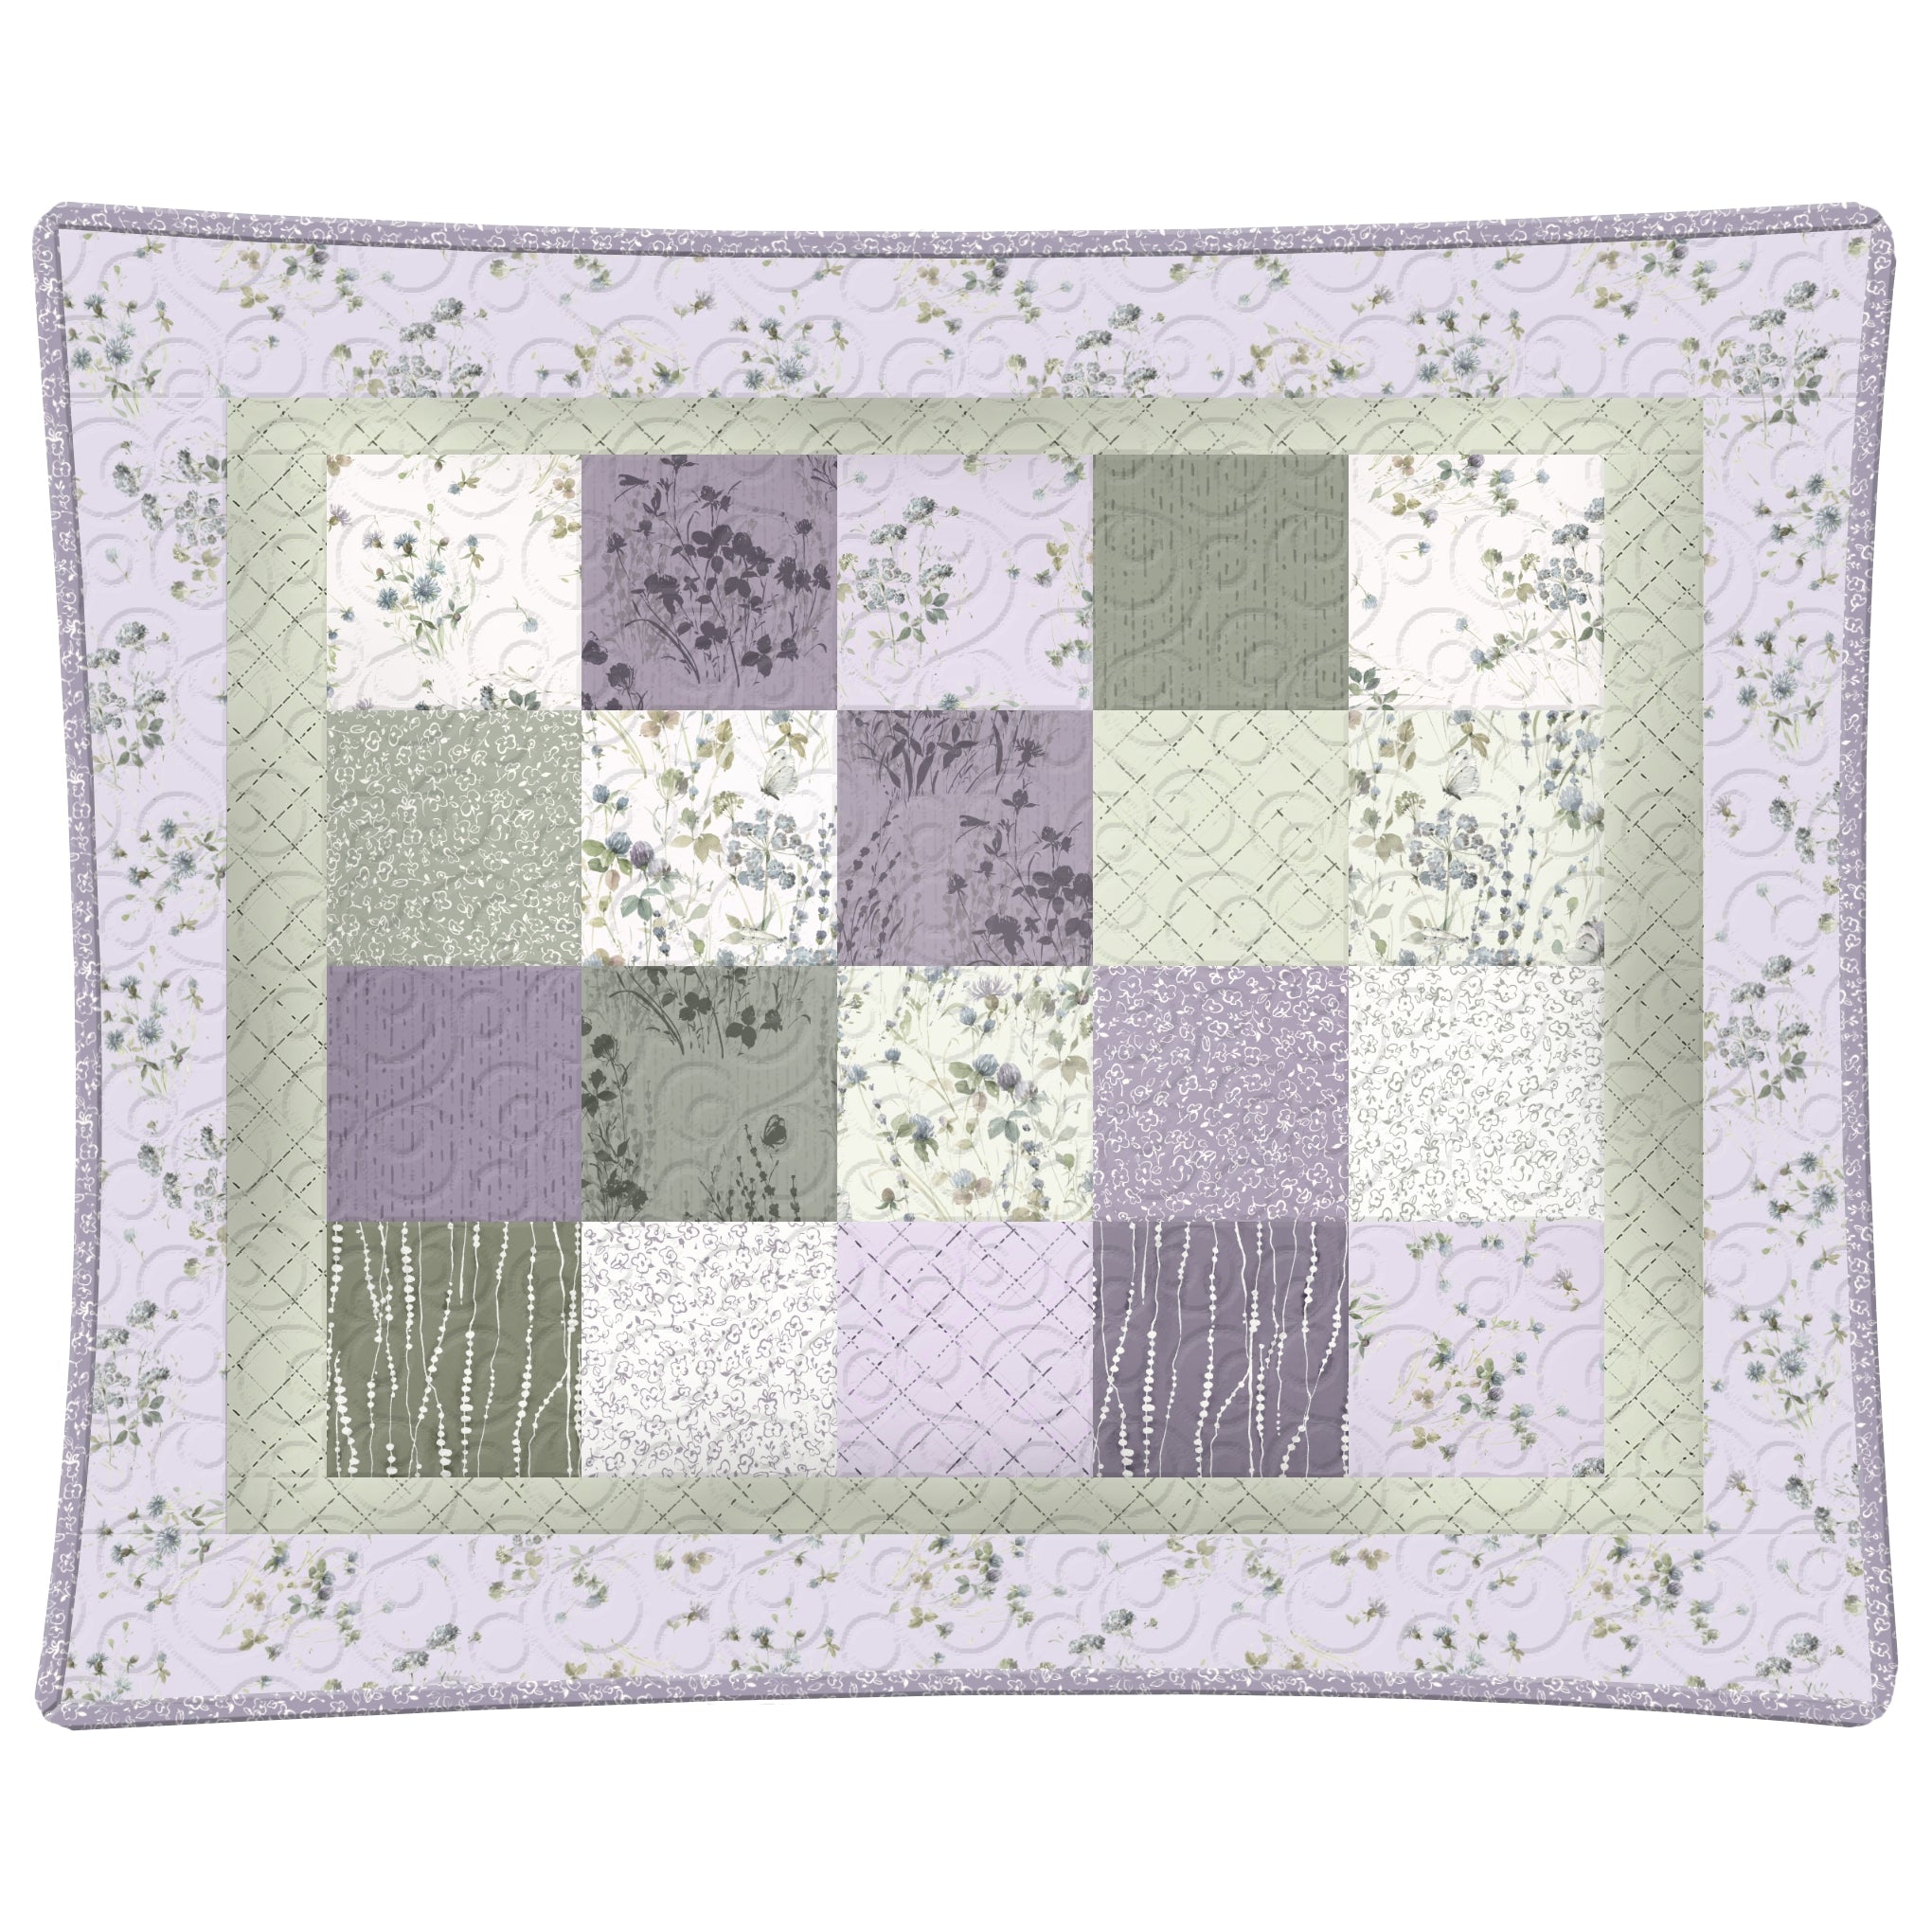 Set of 2 Pillow Shams Pattern - Free Digital Download-Wilmington Prints-My Favorite Quilt Store